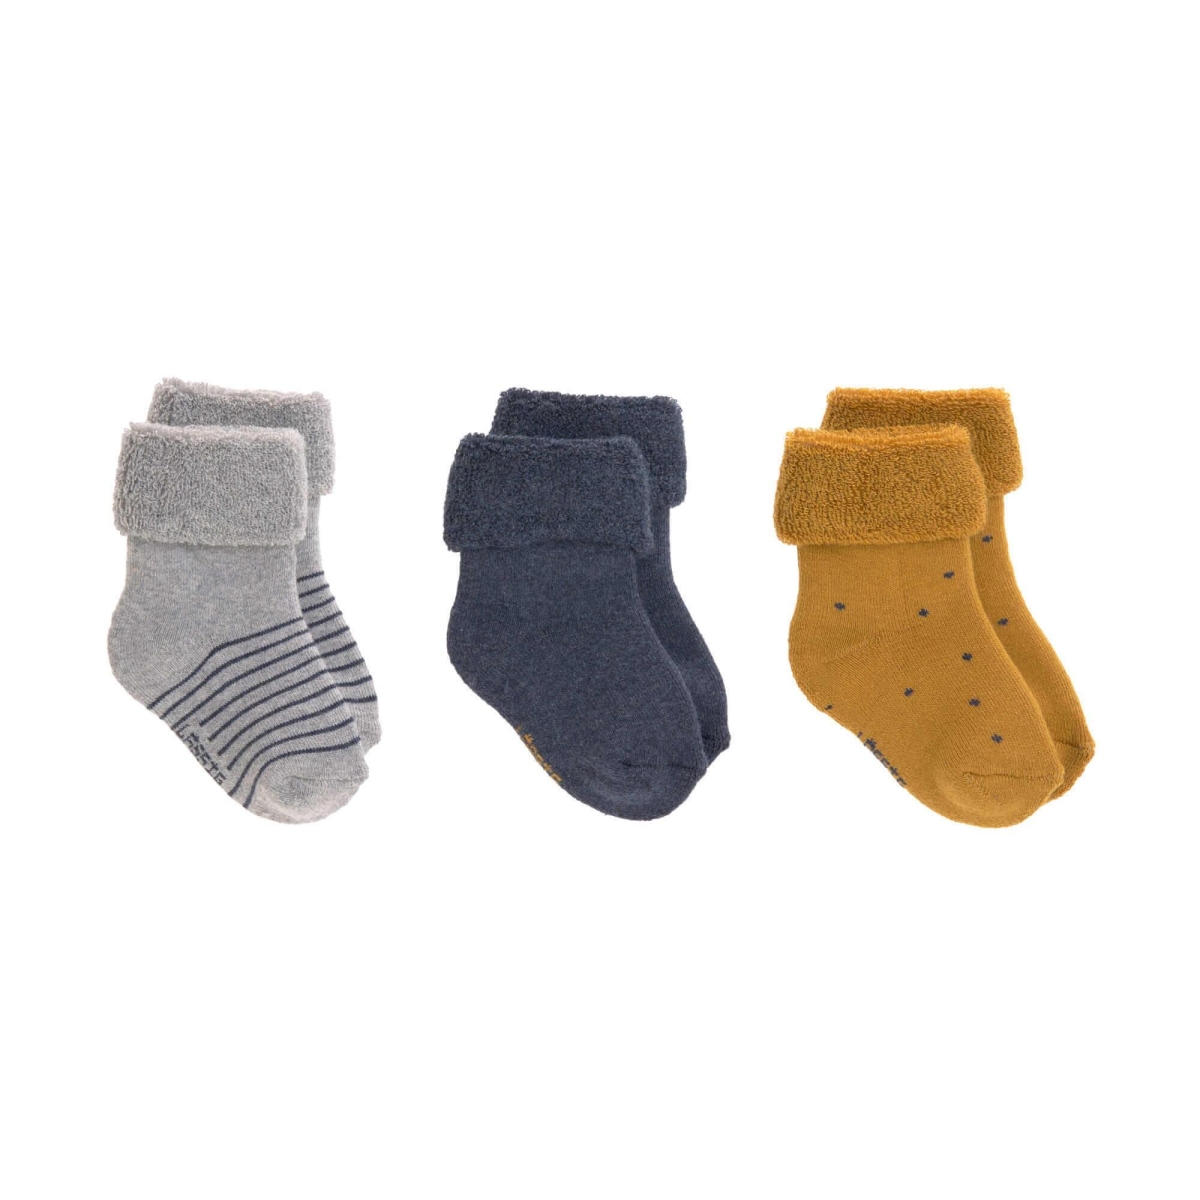 Newborn sokken 3stuks blauw maatje: 15-18